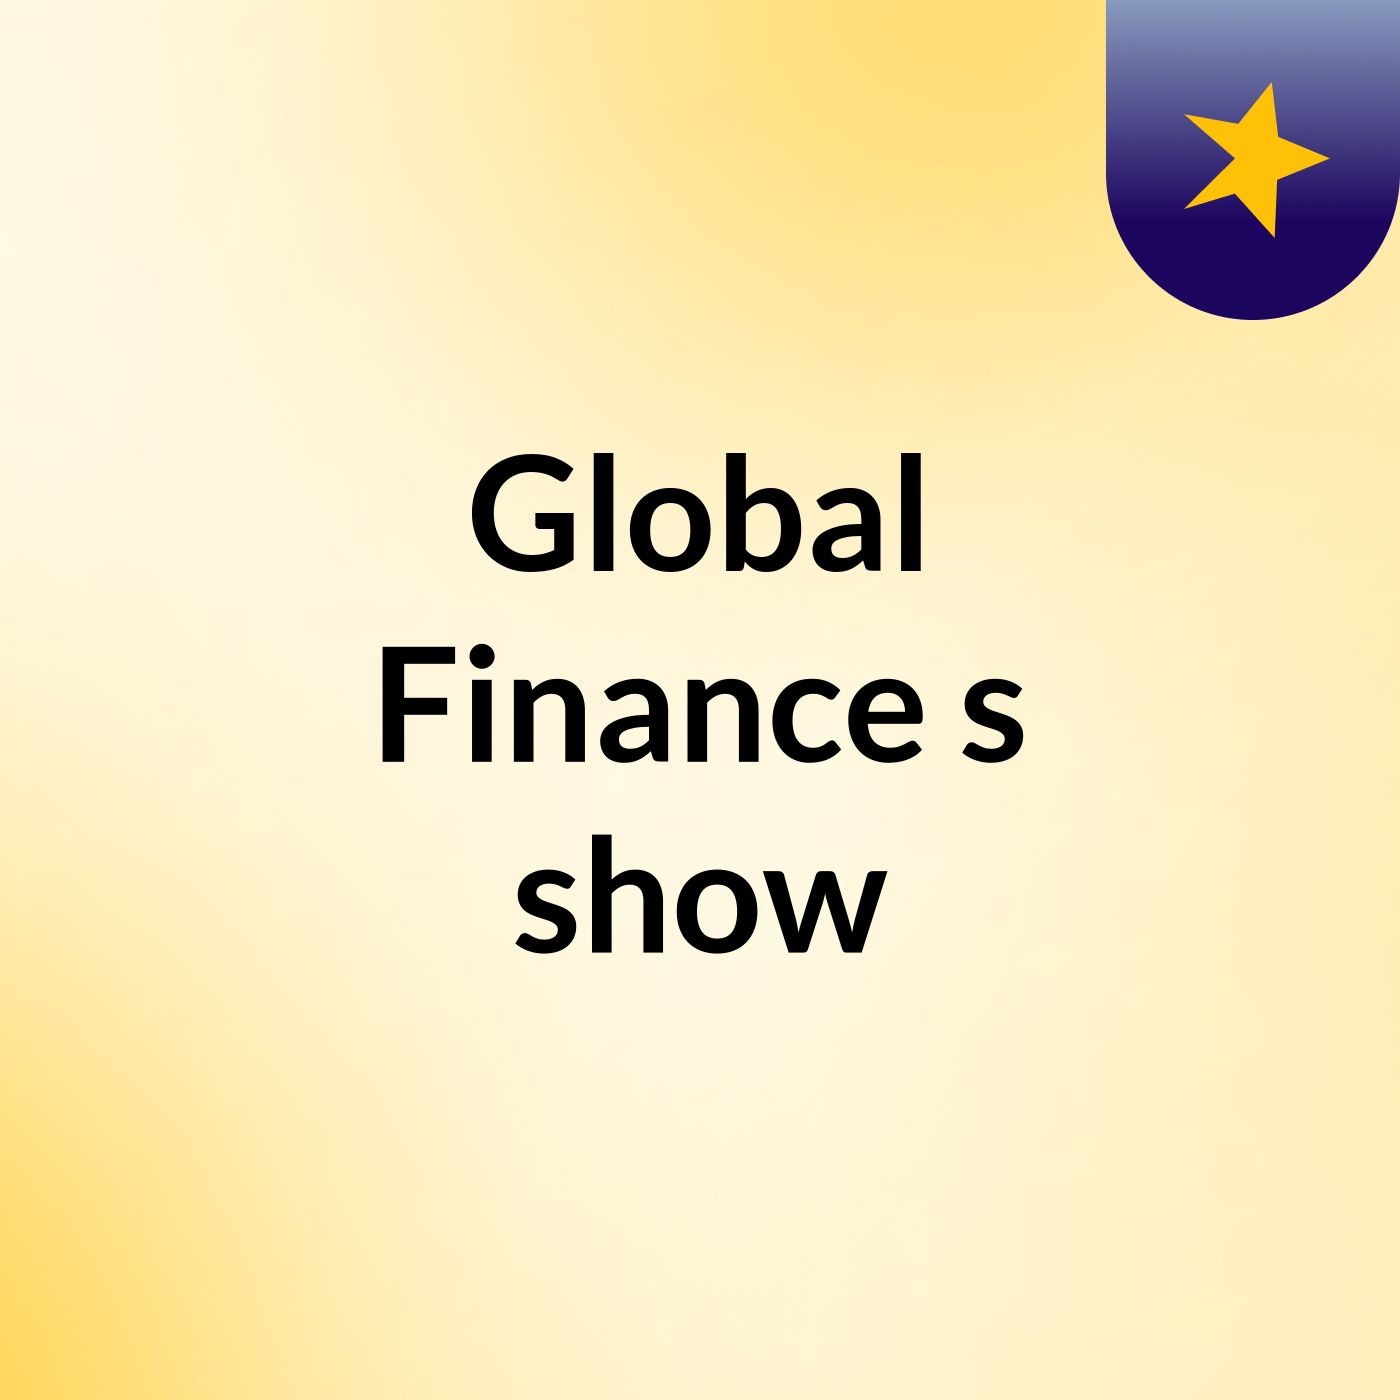 Global Finance's show